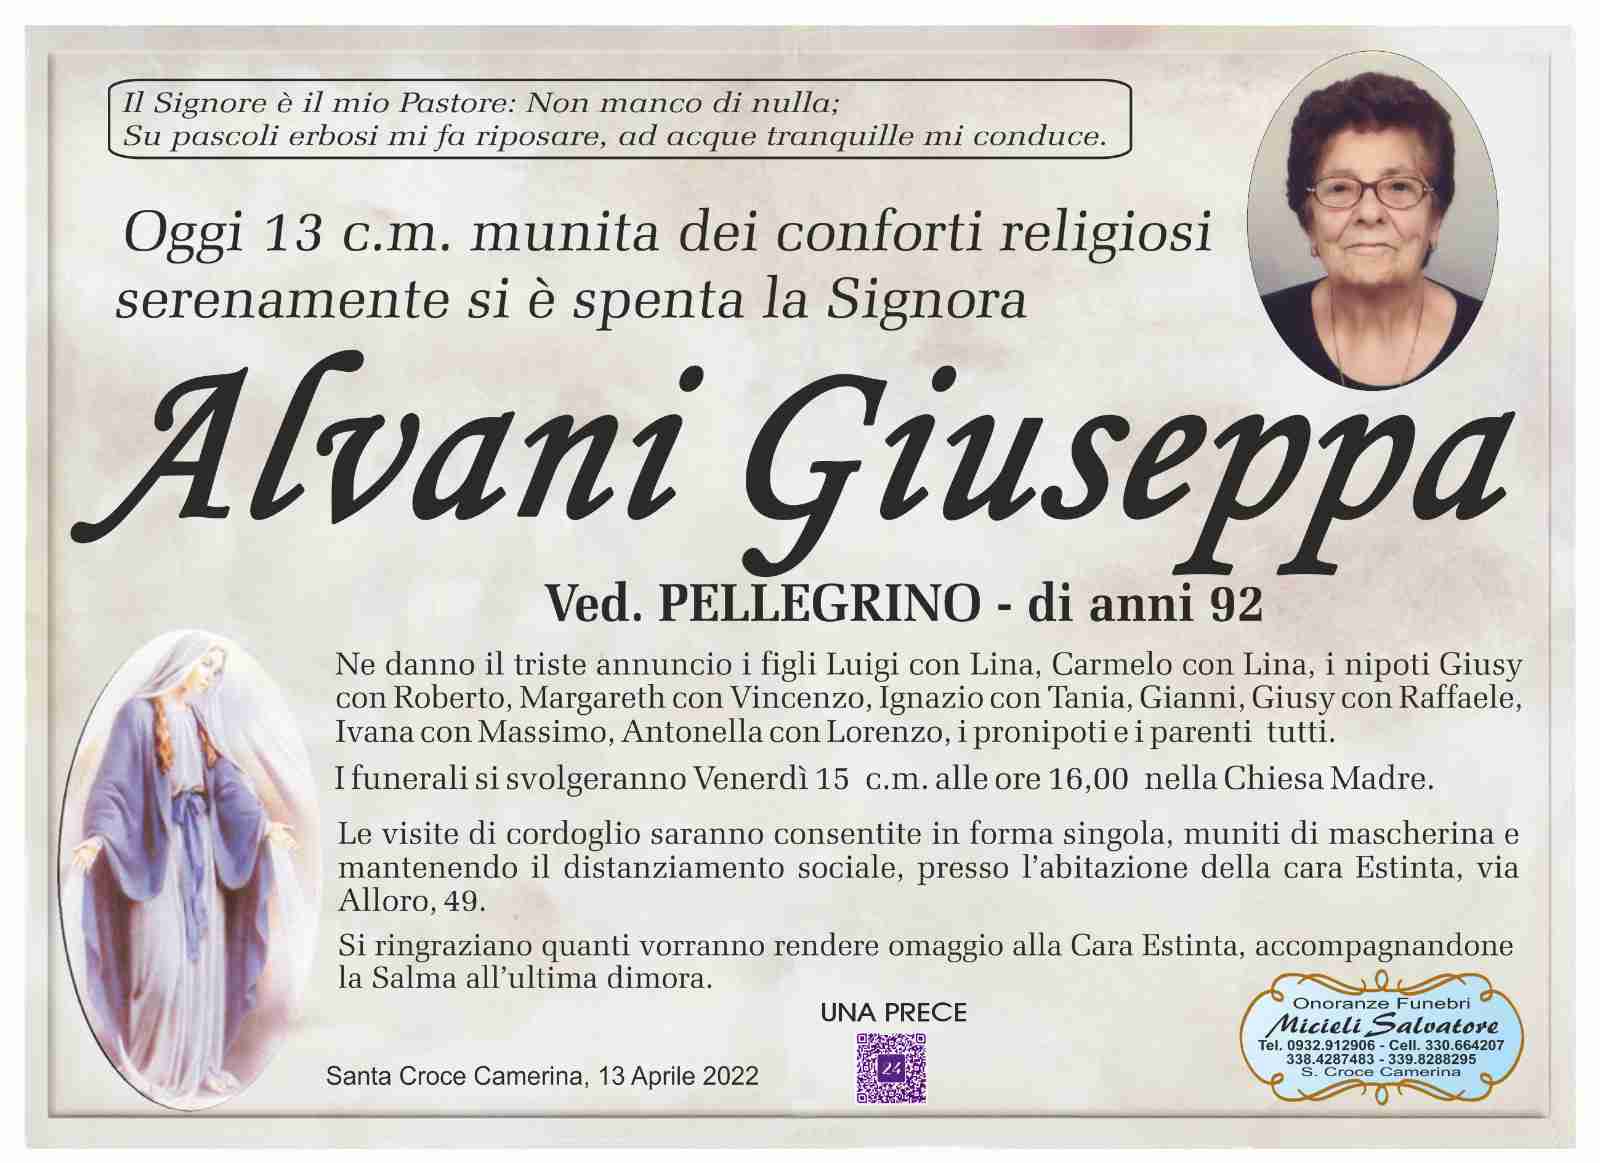 Giuseppa Alvani